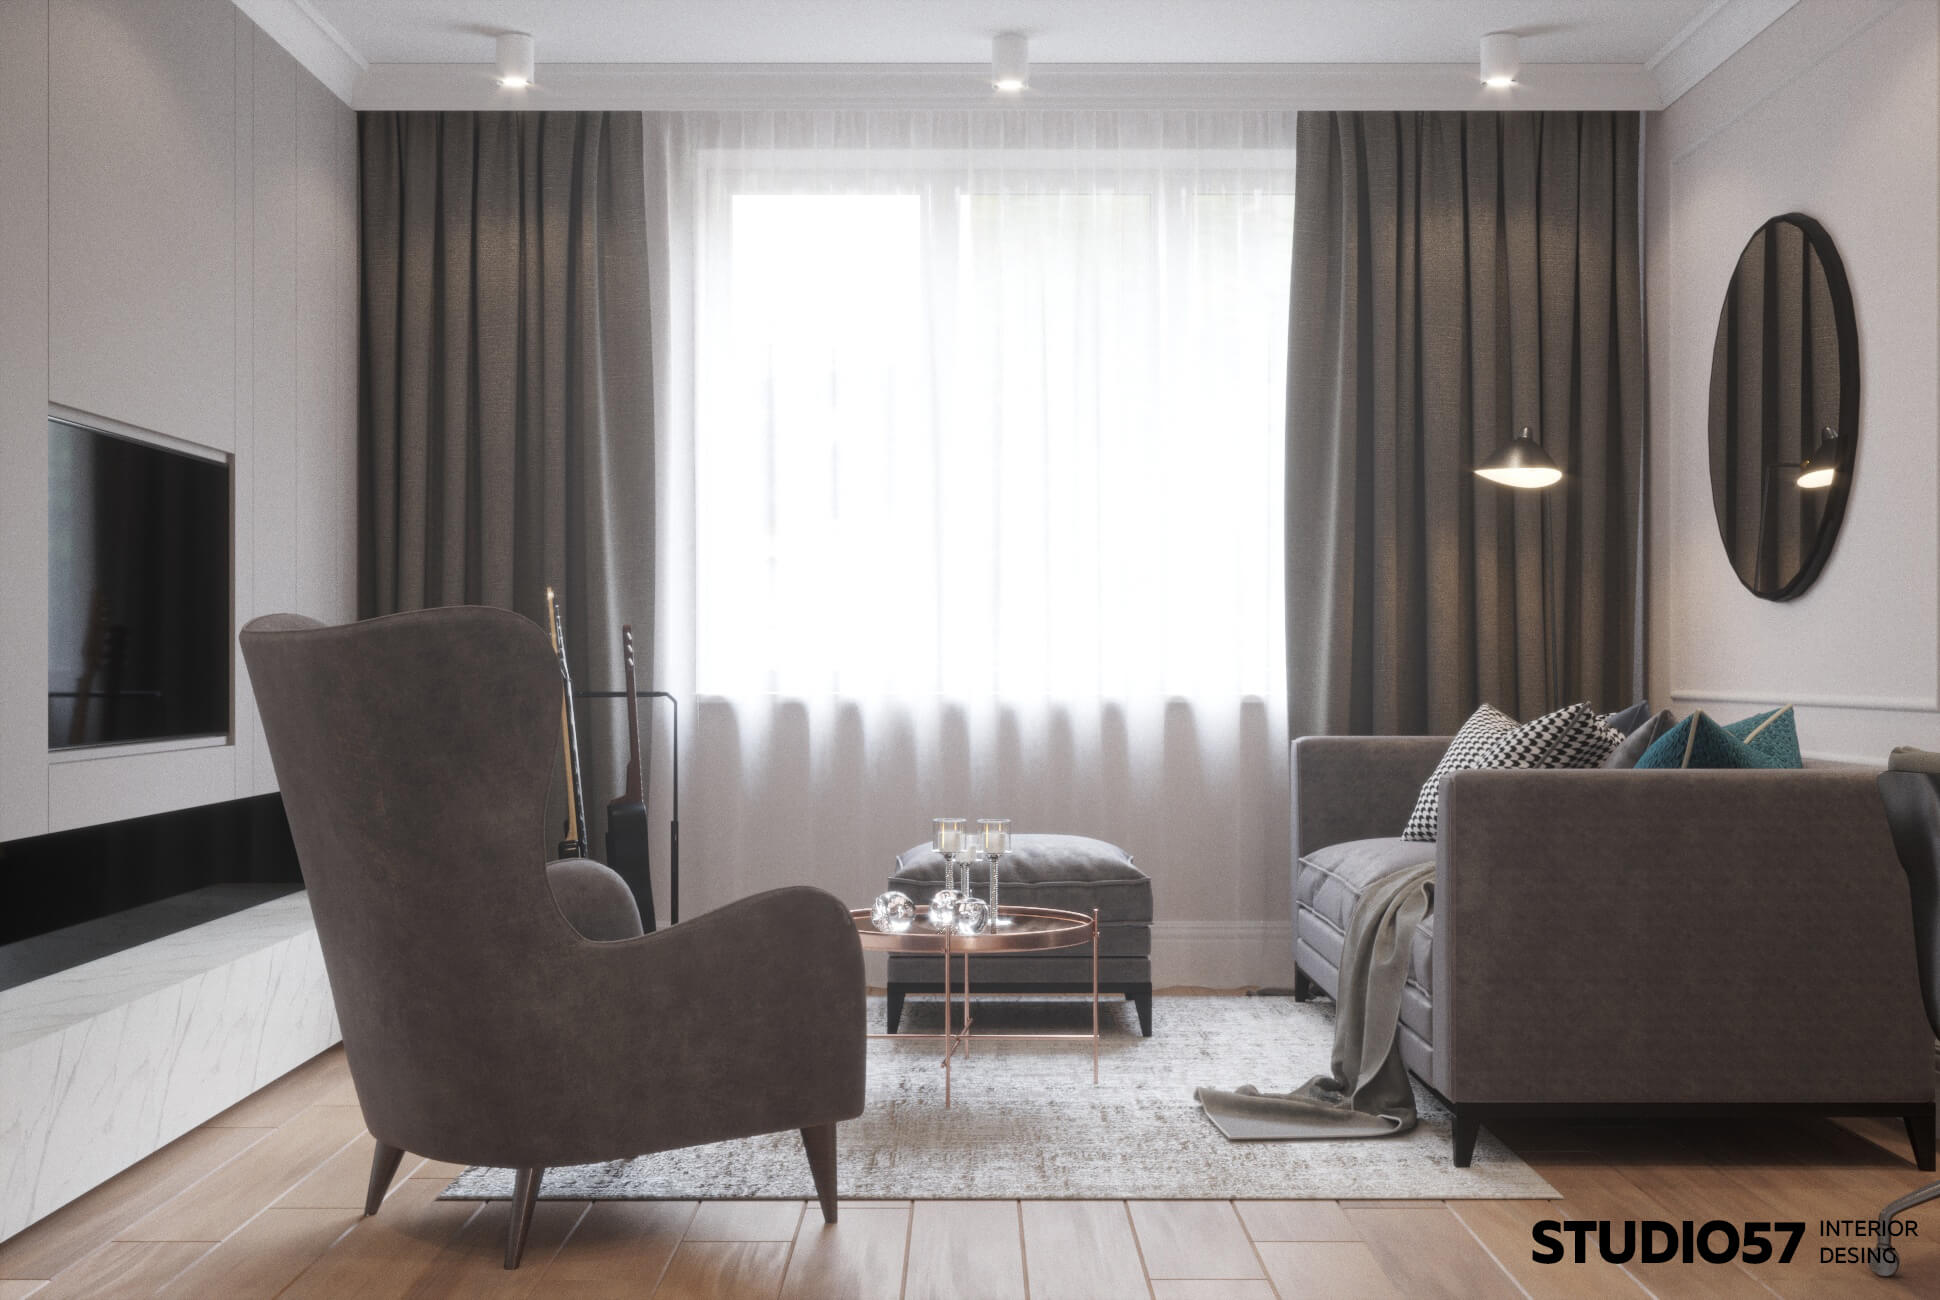 Living room design in gray